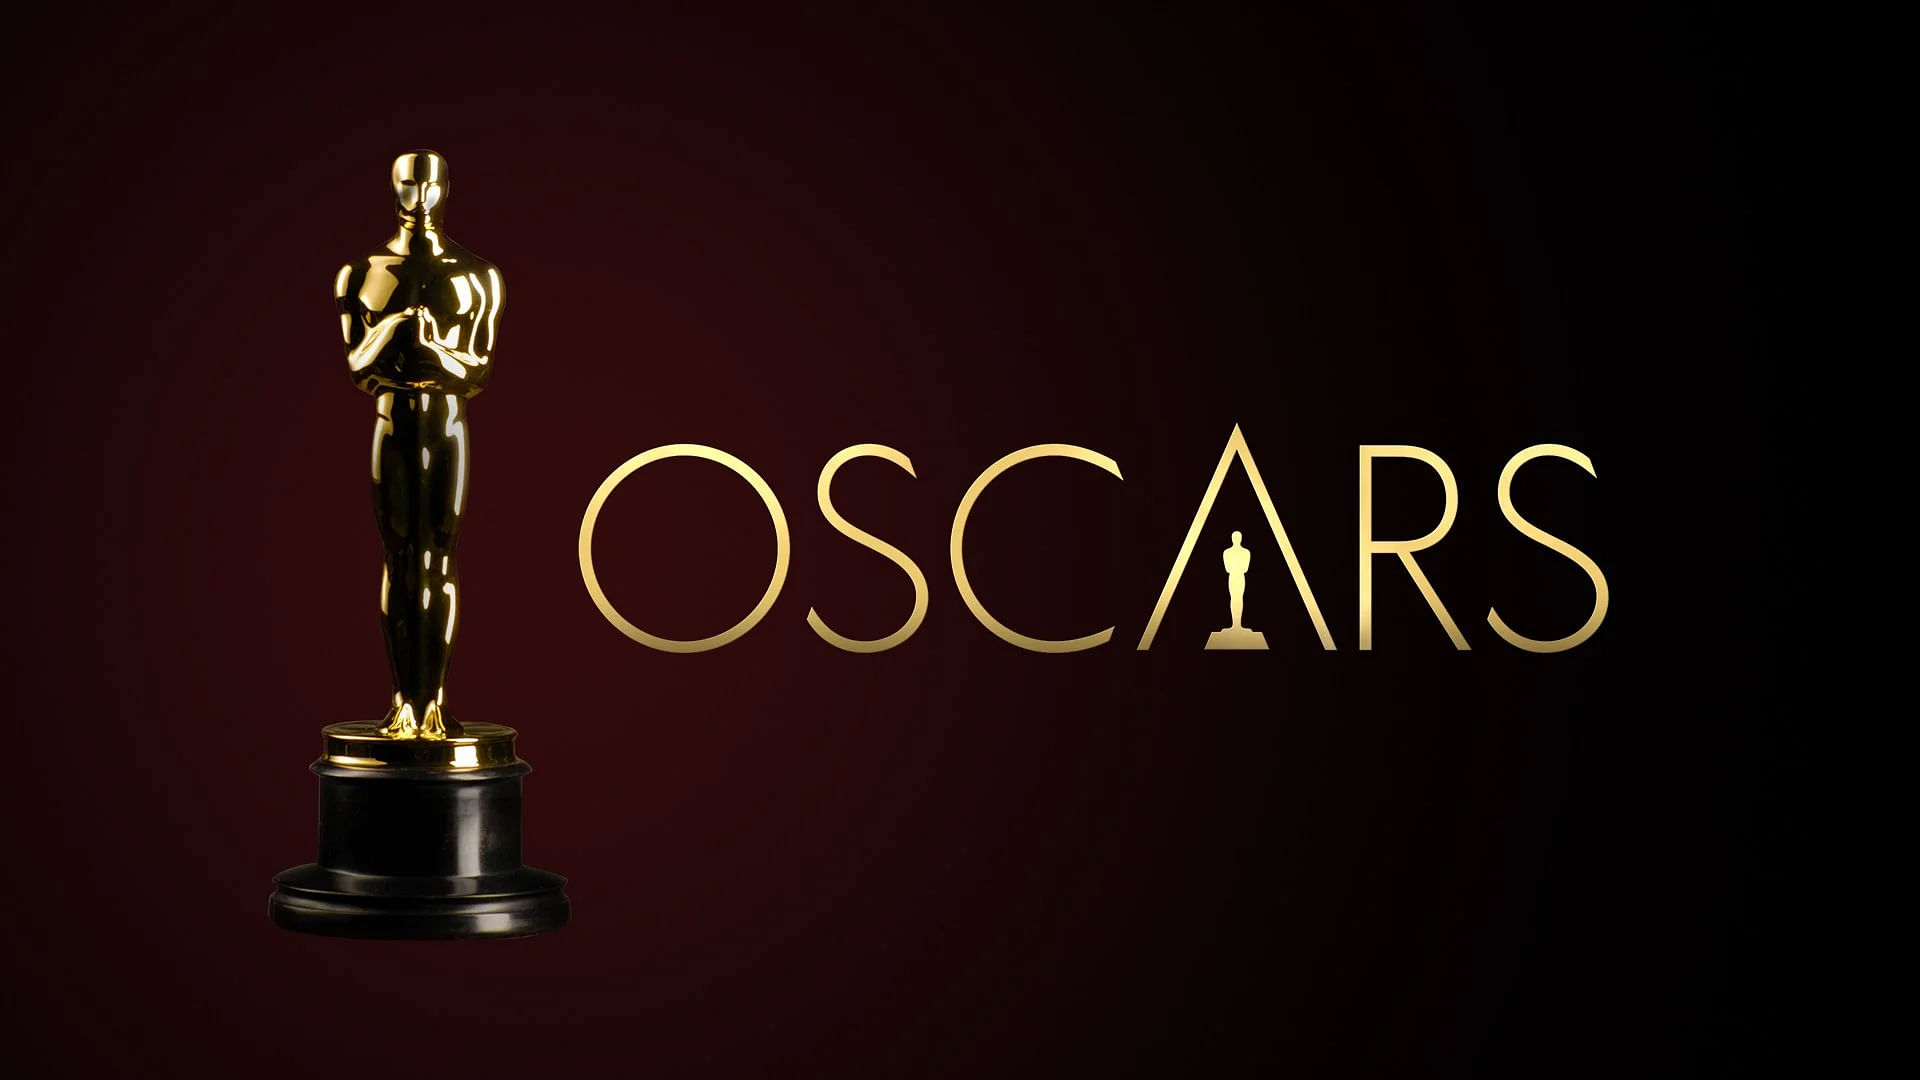 The Oscars 2021 will be streamed live on oscars.com